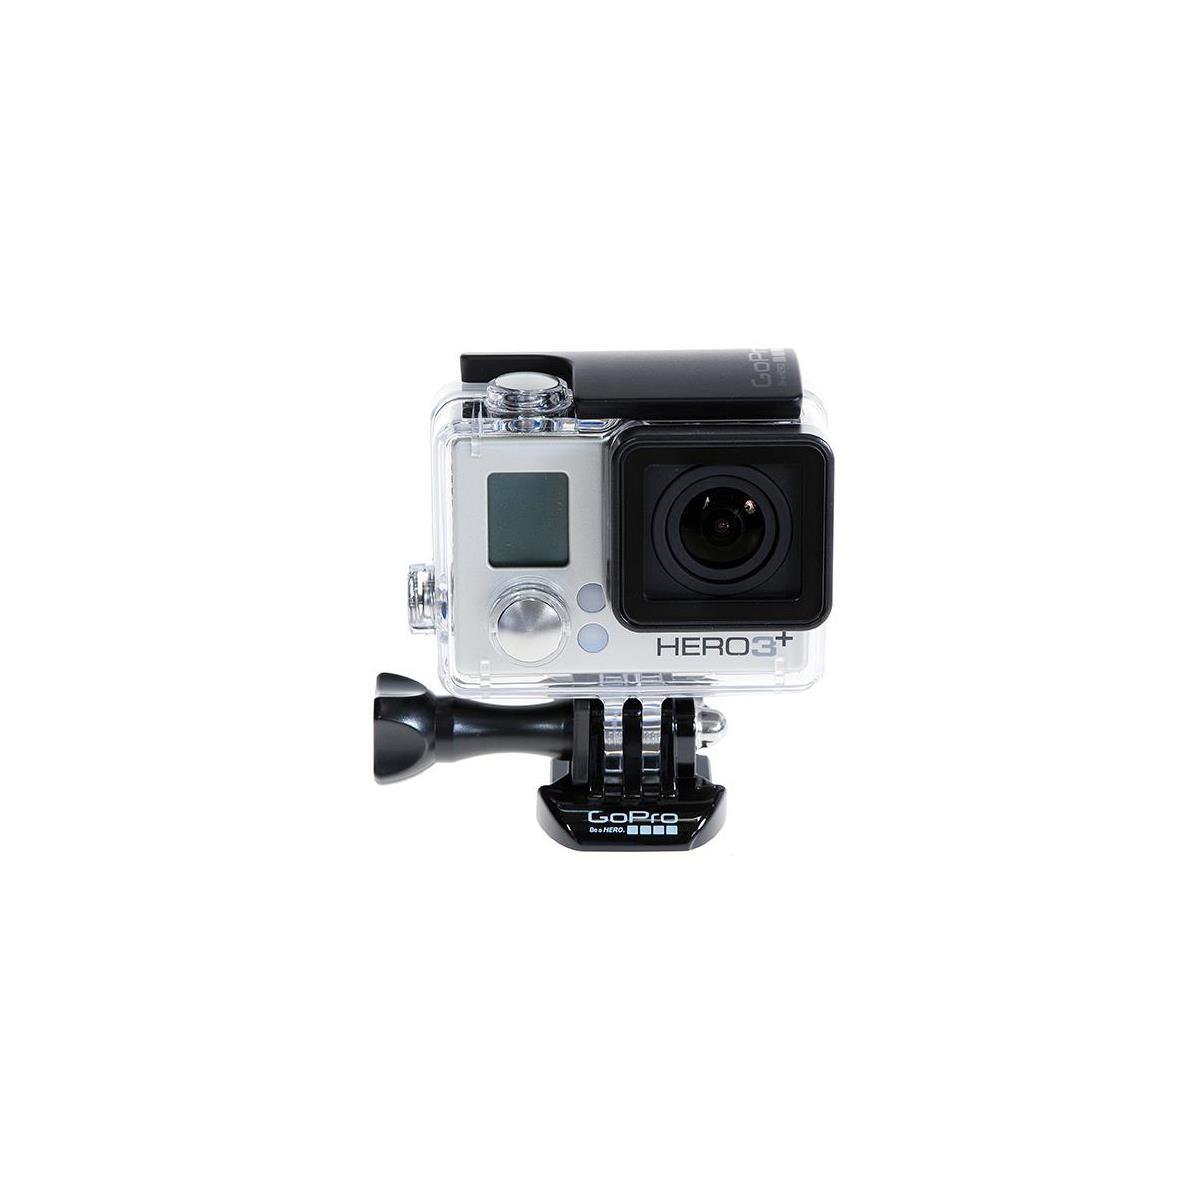 Image of GoPro HERO3+ Silver Edition Camera